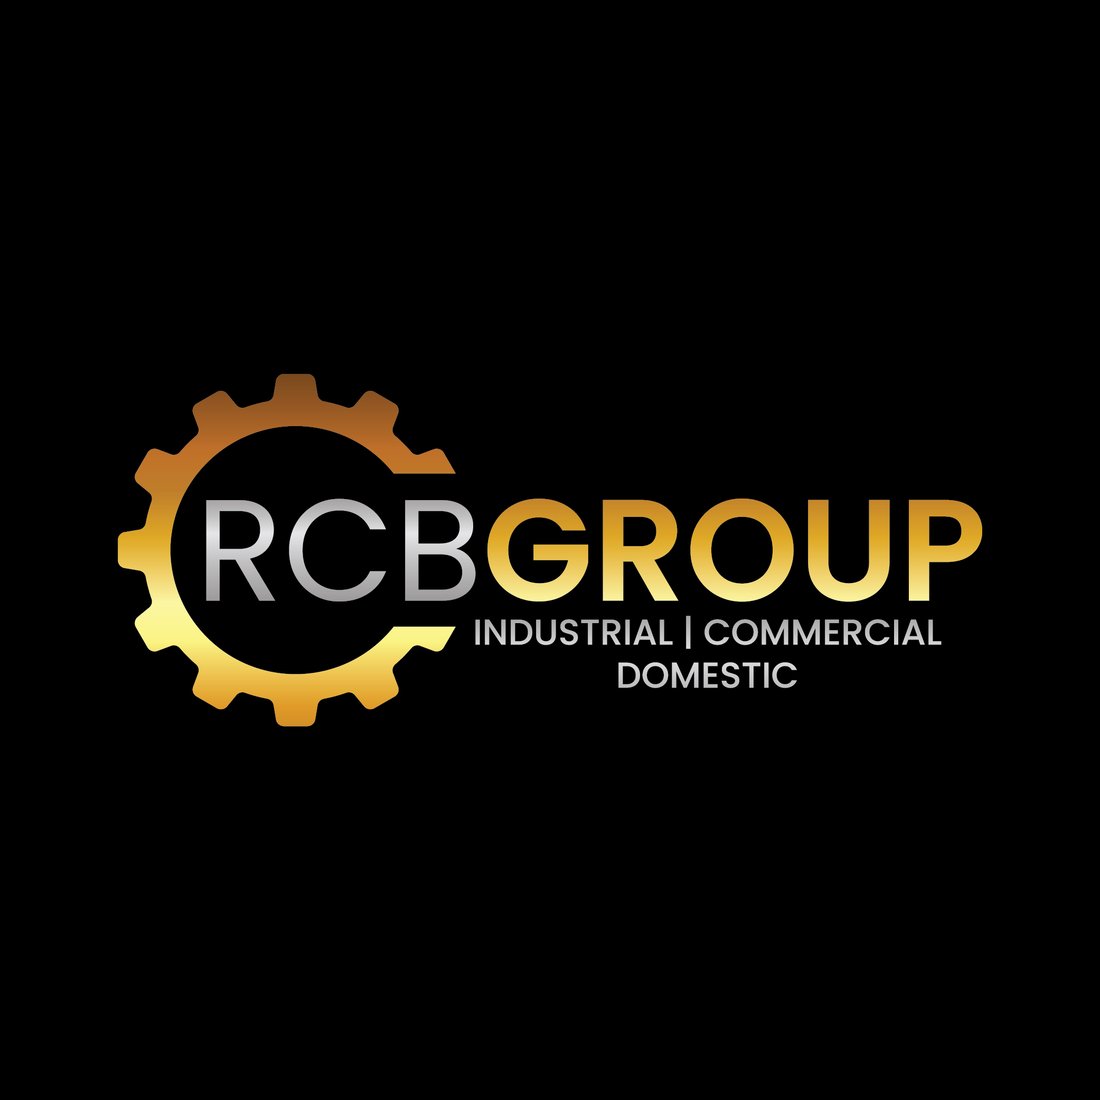 Main header - "RCB Group Ltd"